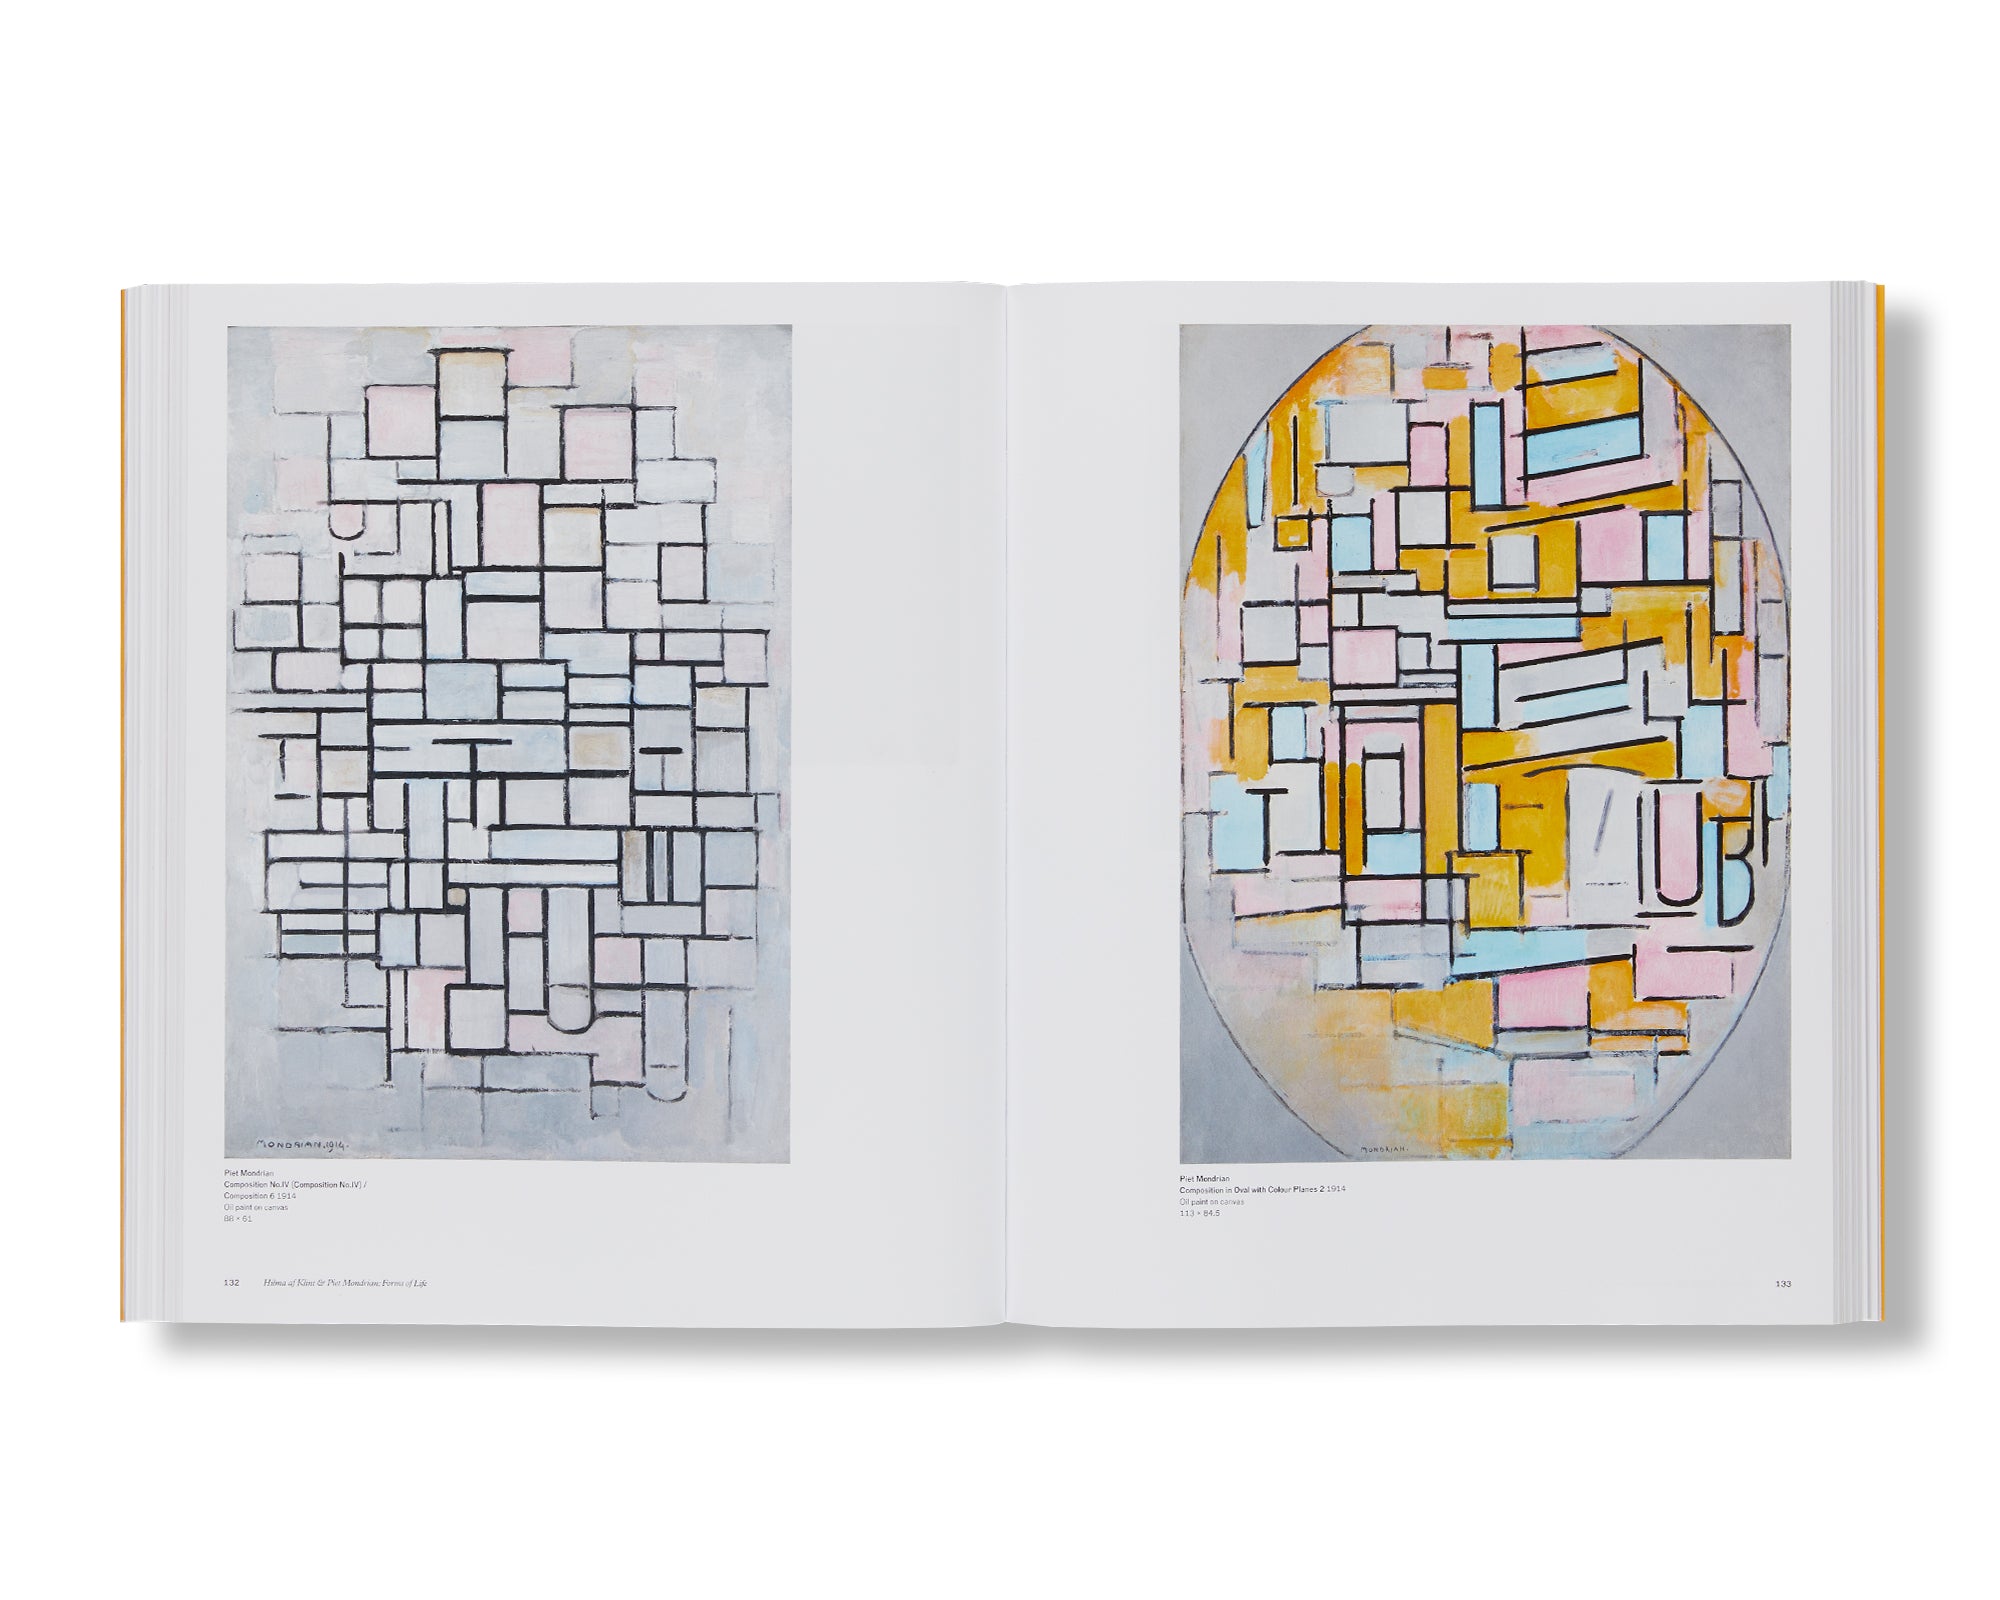 HILMA AF KLINT AND PIET MONDRIAN: FORMS OF LIFE by Hilma af Klint, Piet Mondrian